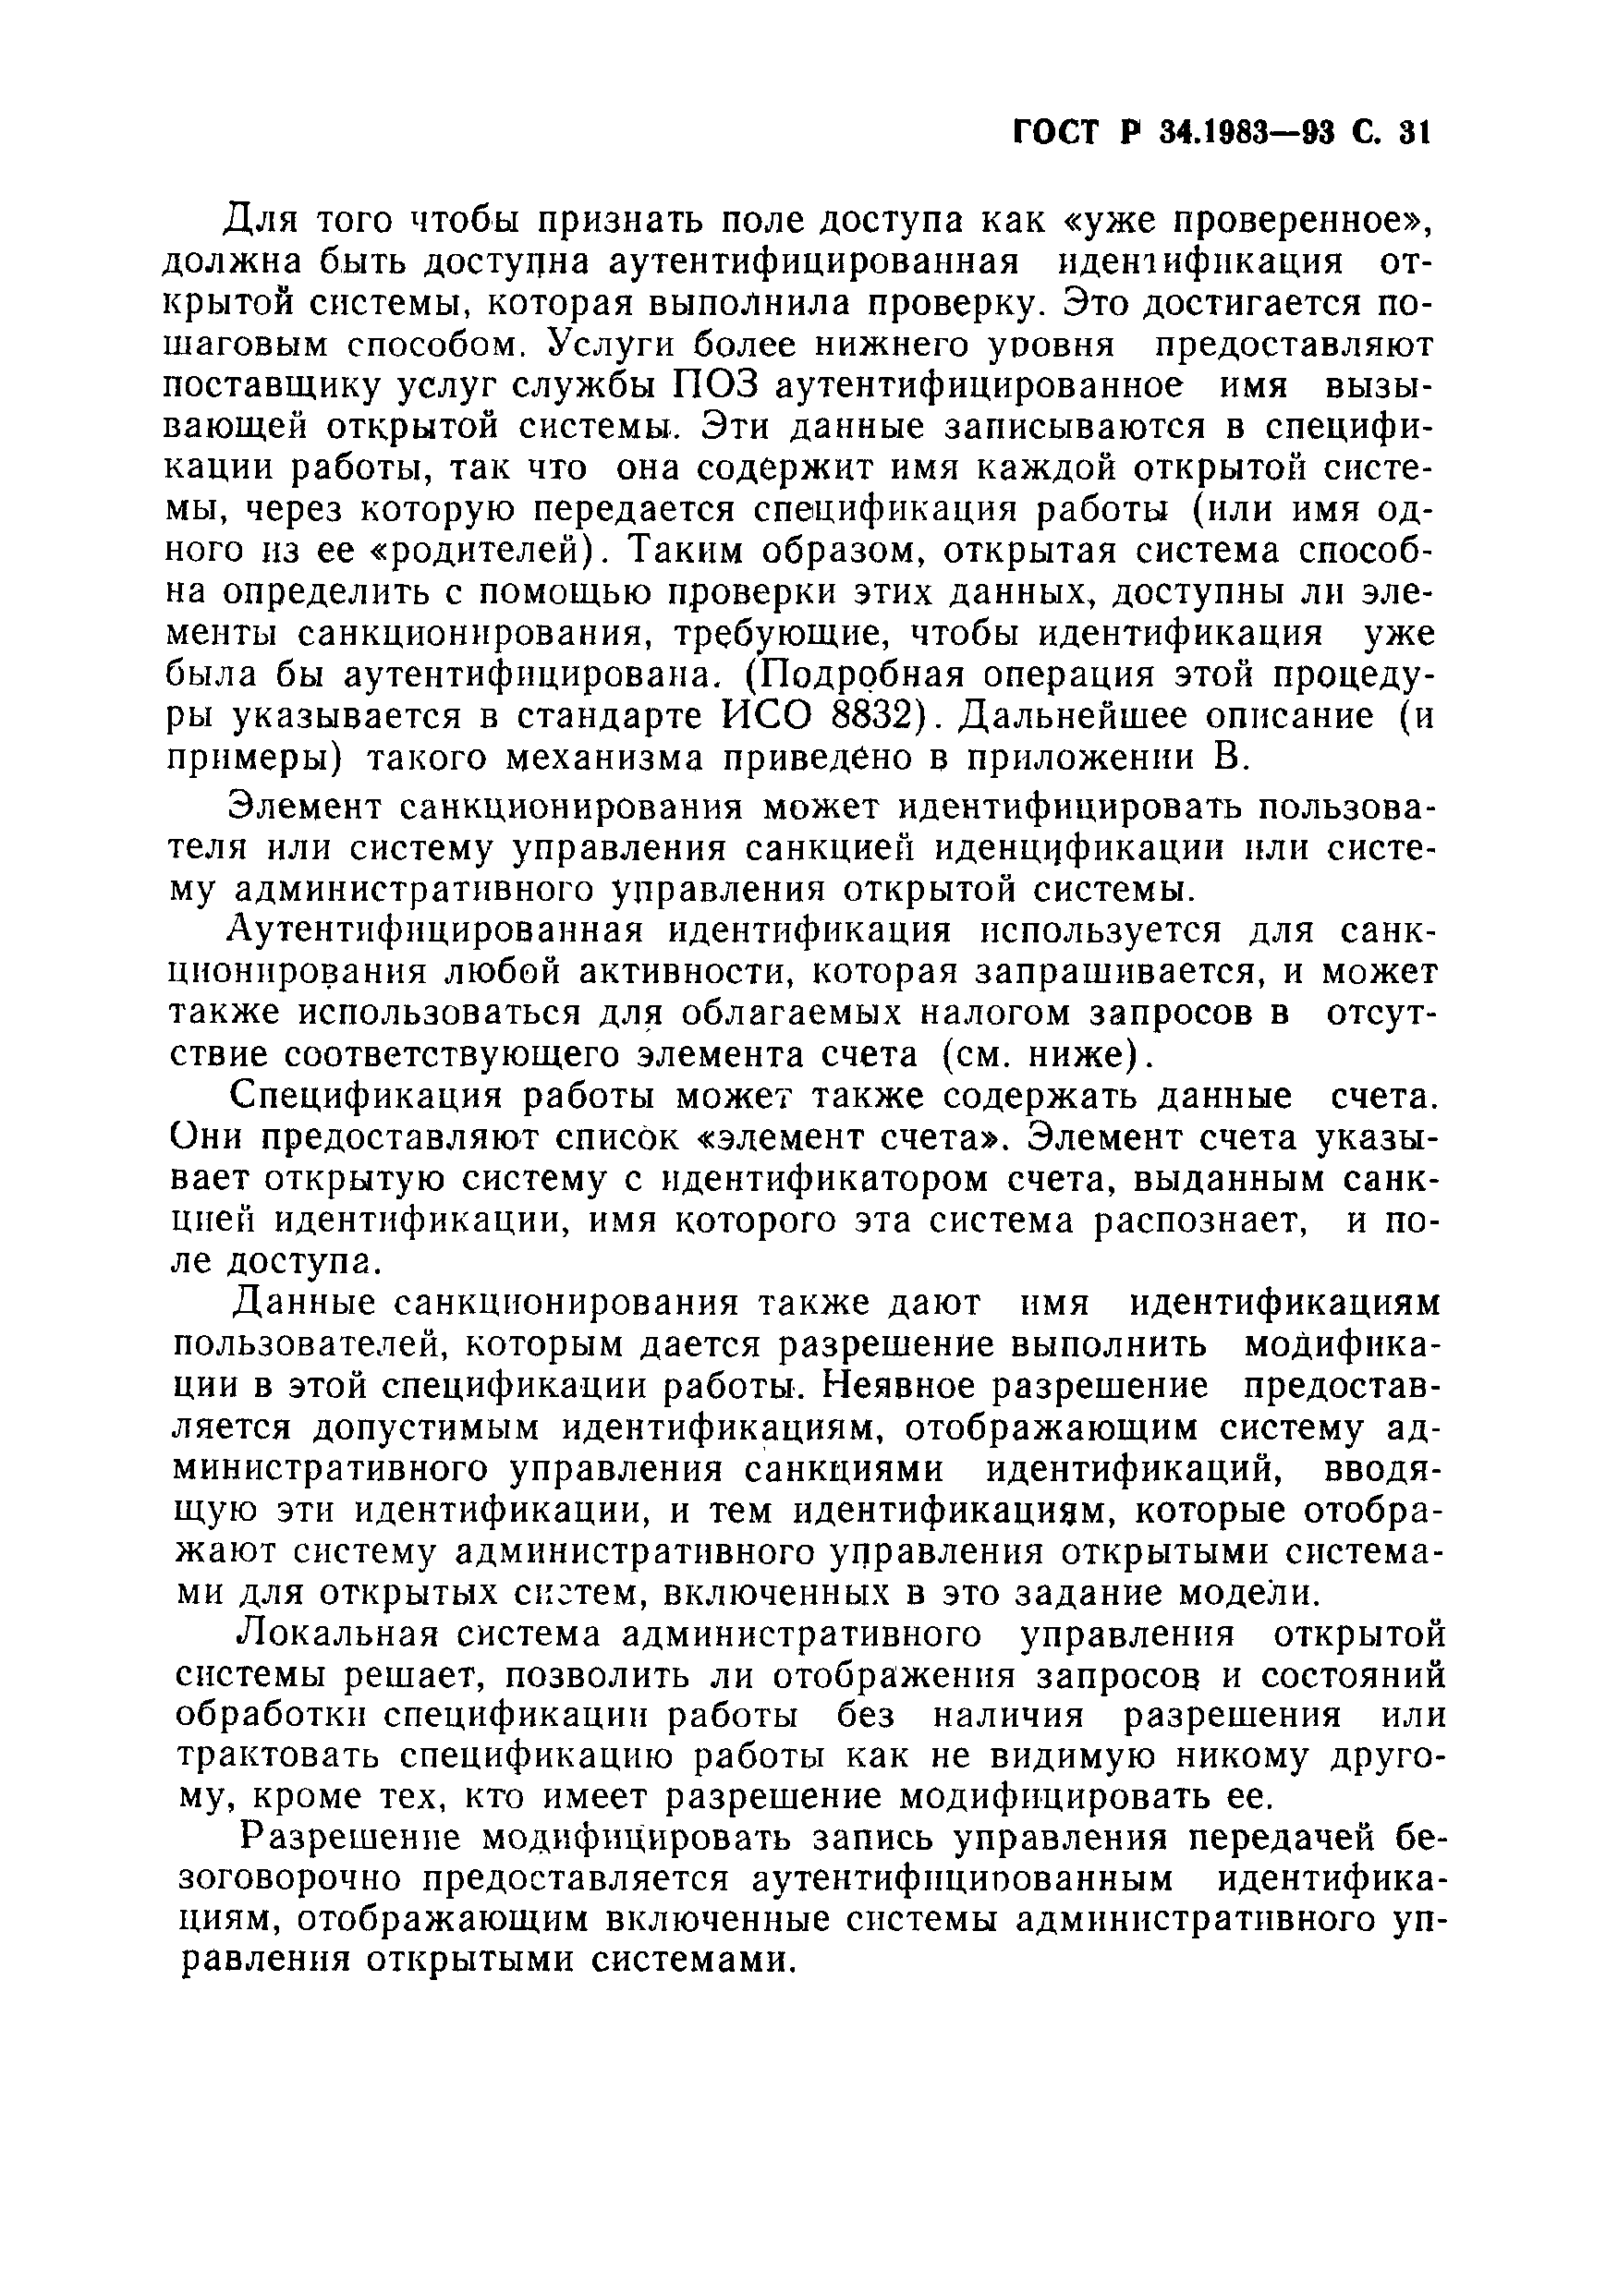 ГОСТ Р 34.1983-93. Страница 32